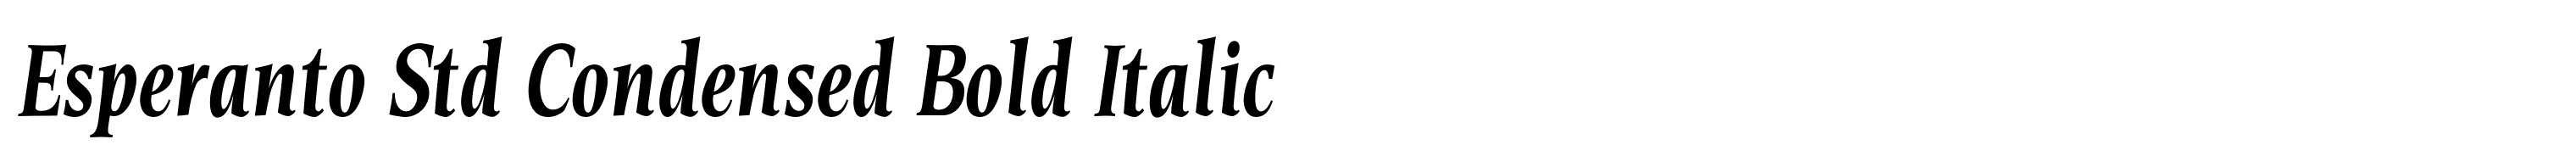 Esperanto Std Condensed Bold Italic